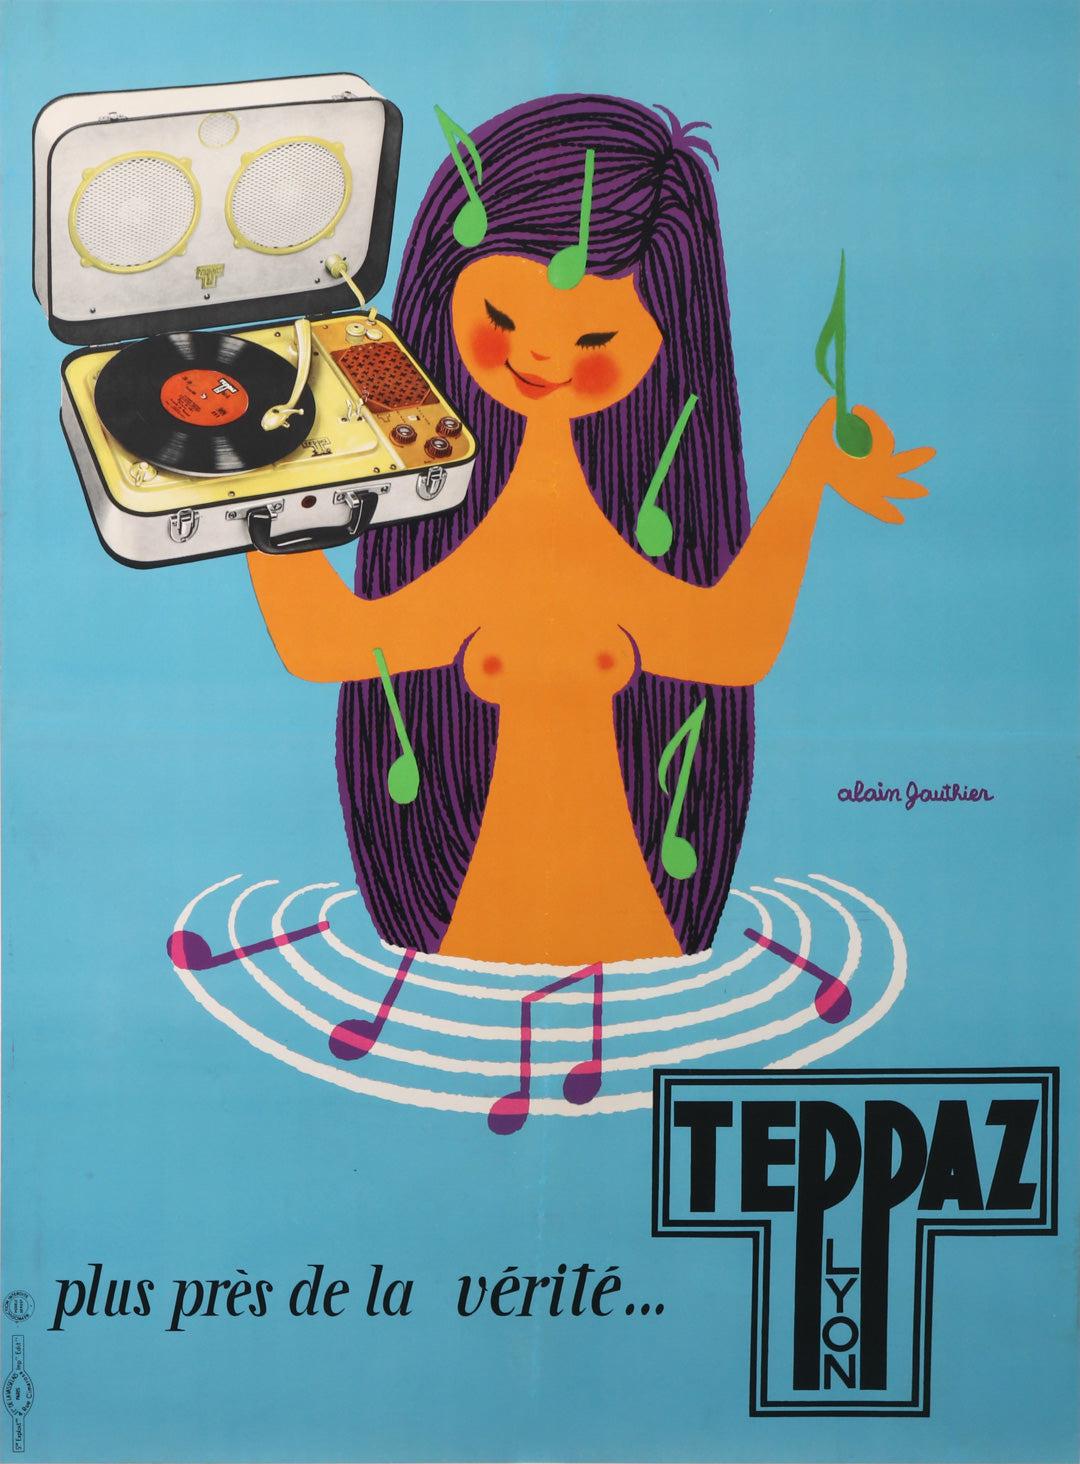 Original Vintage Teppaz Record Player Poster Turntable